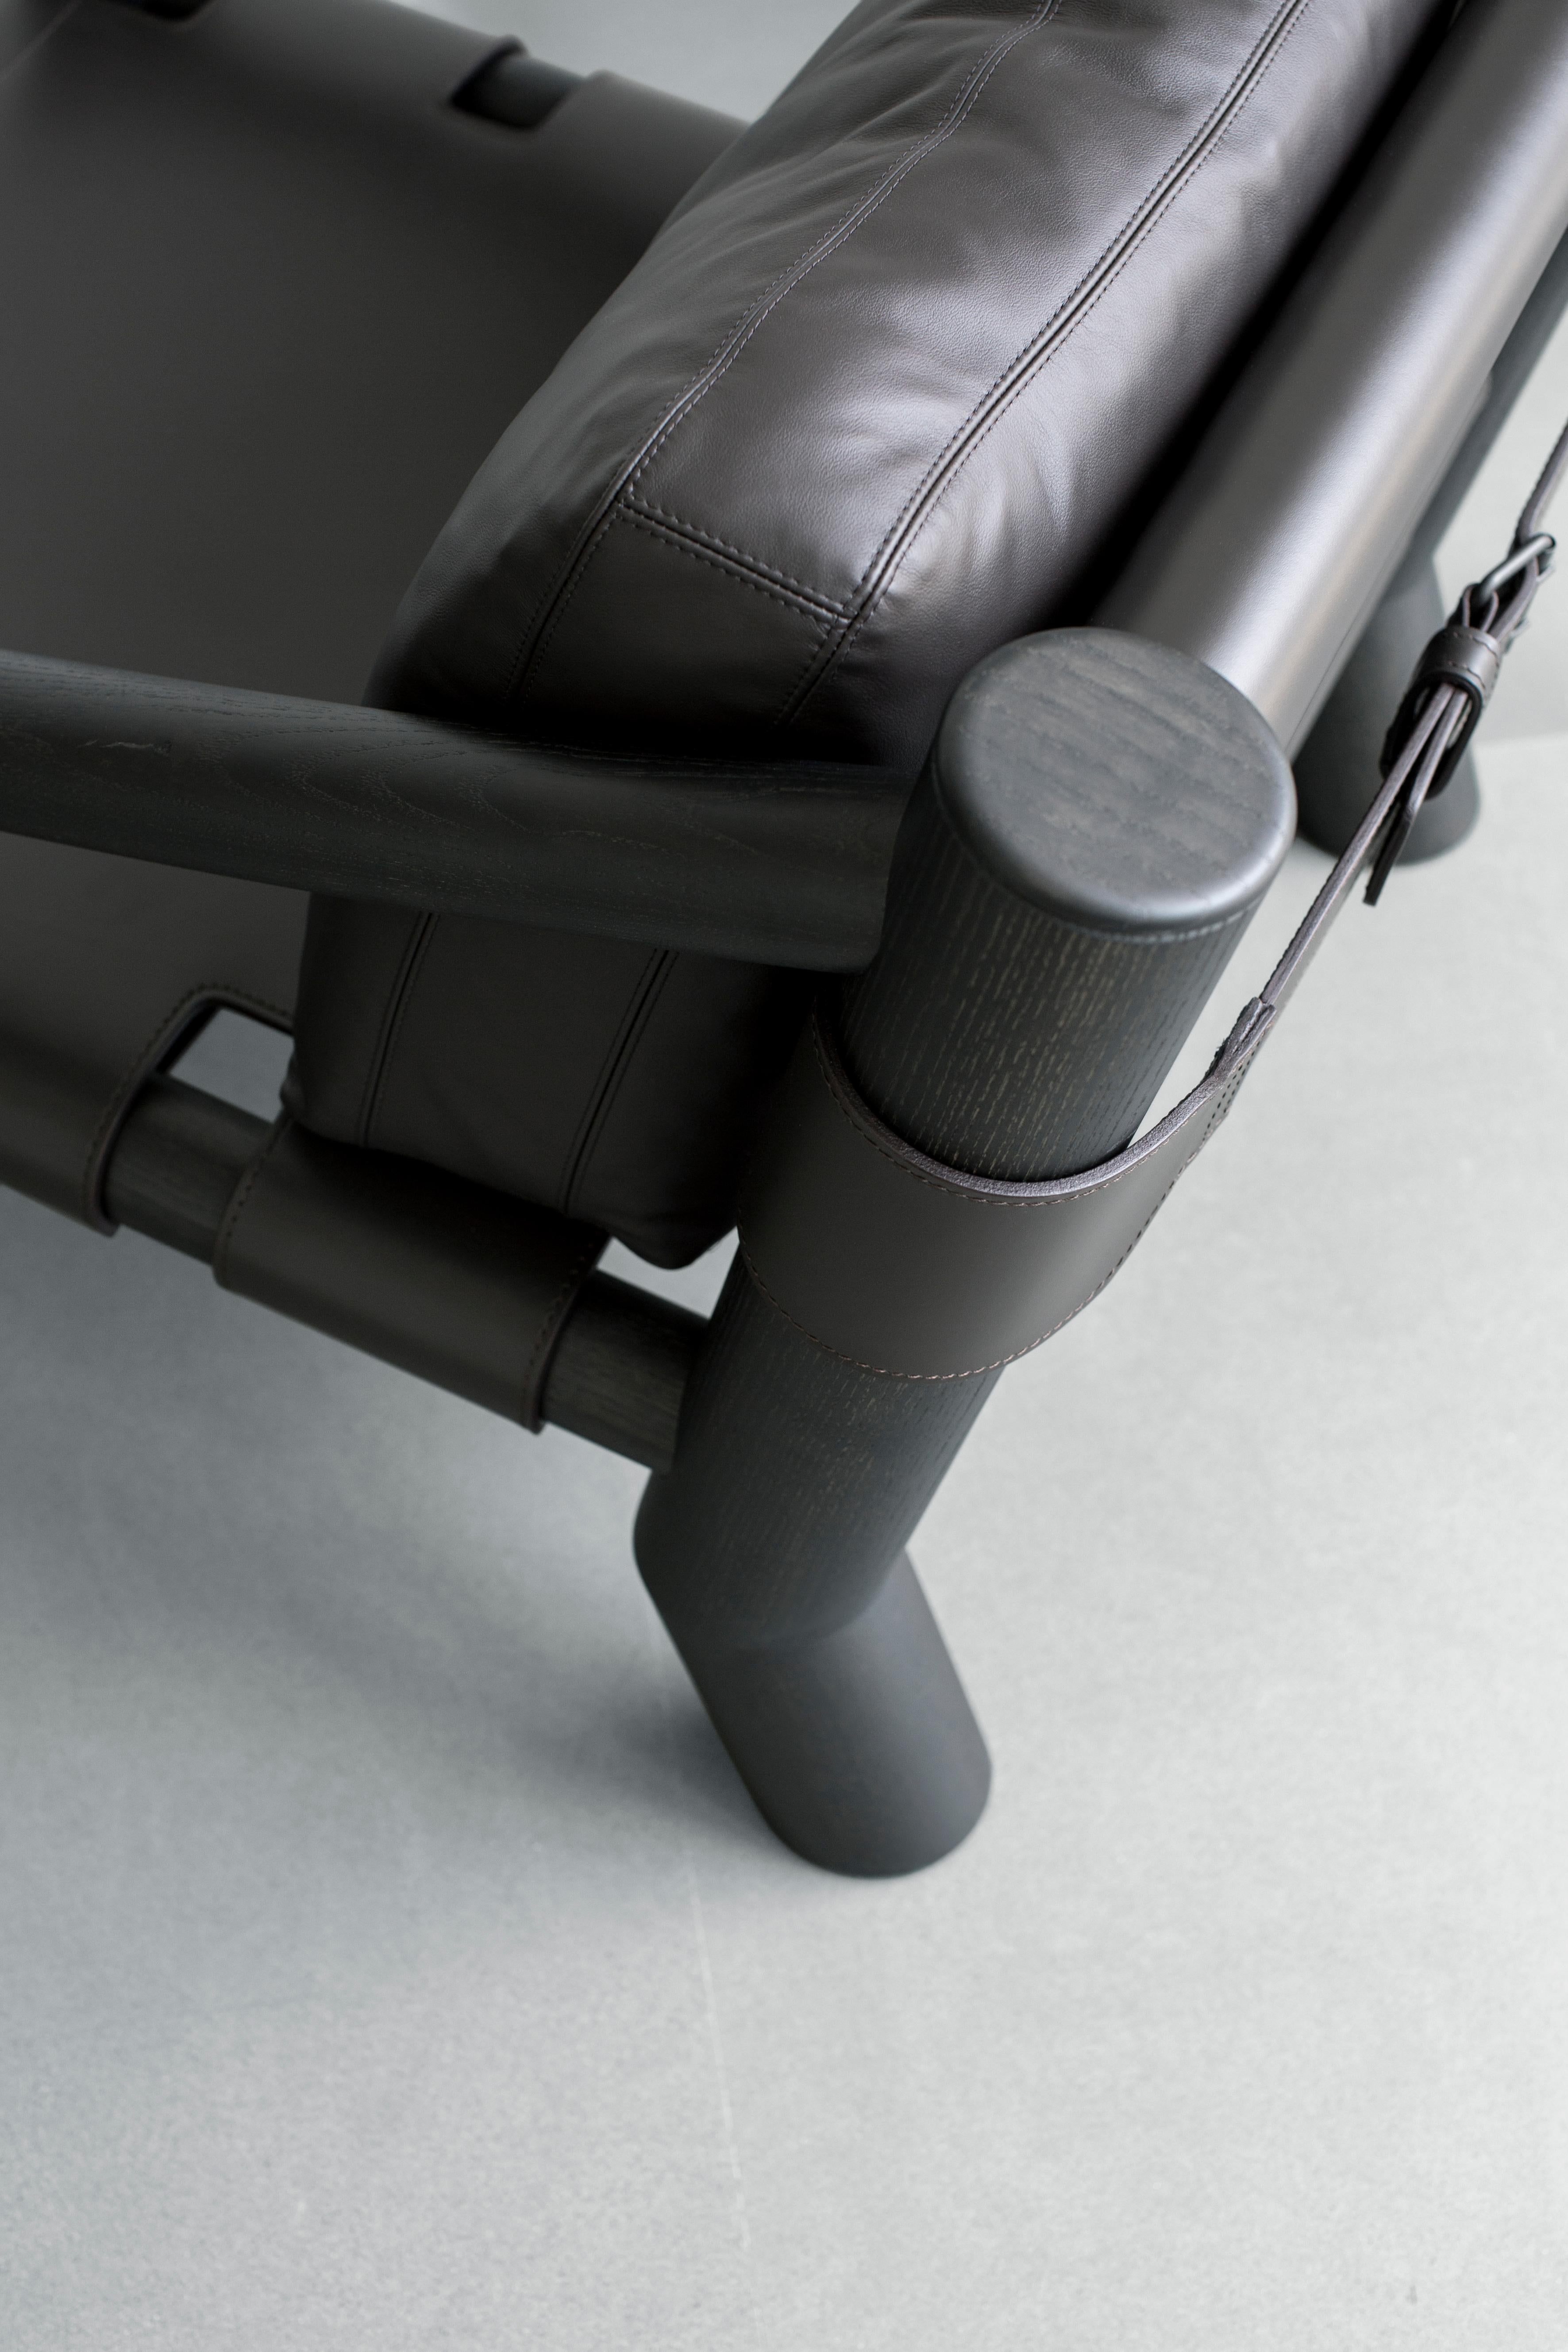 Customizable Tacchini Elephant Leather Lounge Chair by Karen Chekerdijan For Sale 2